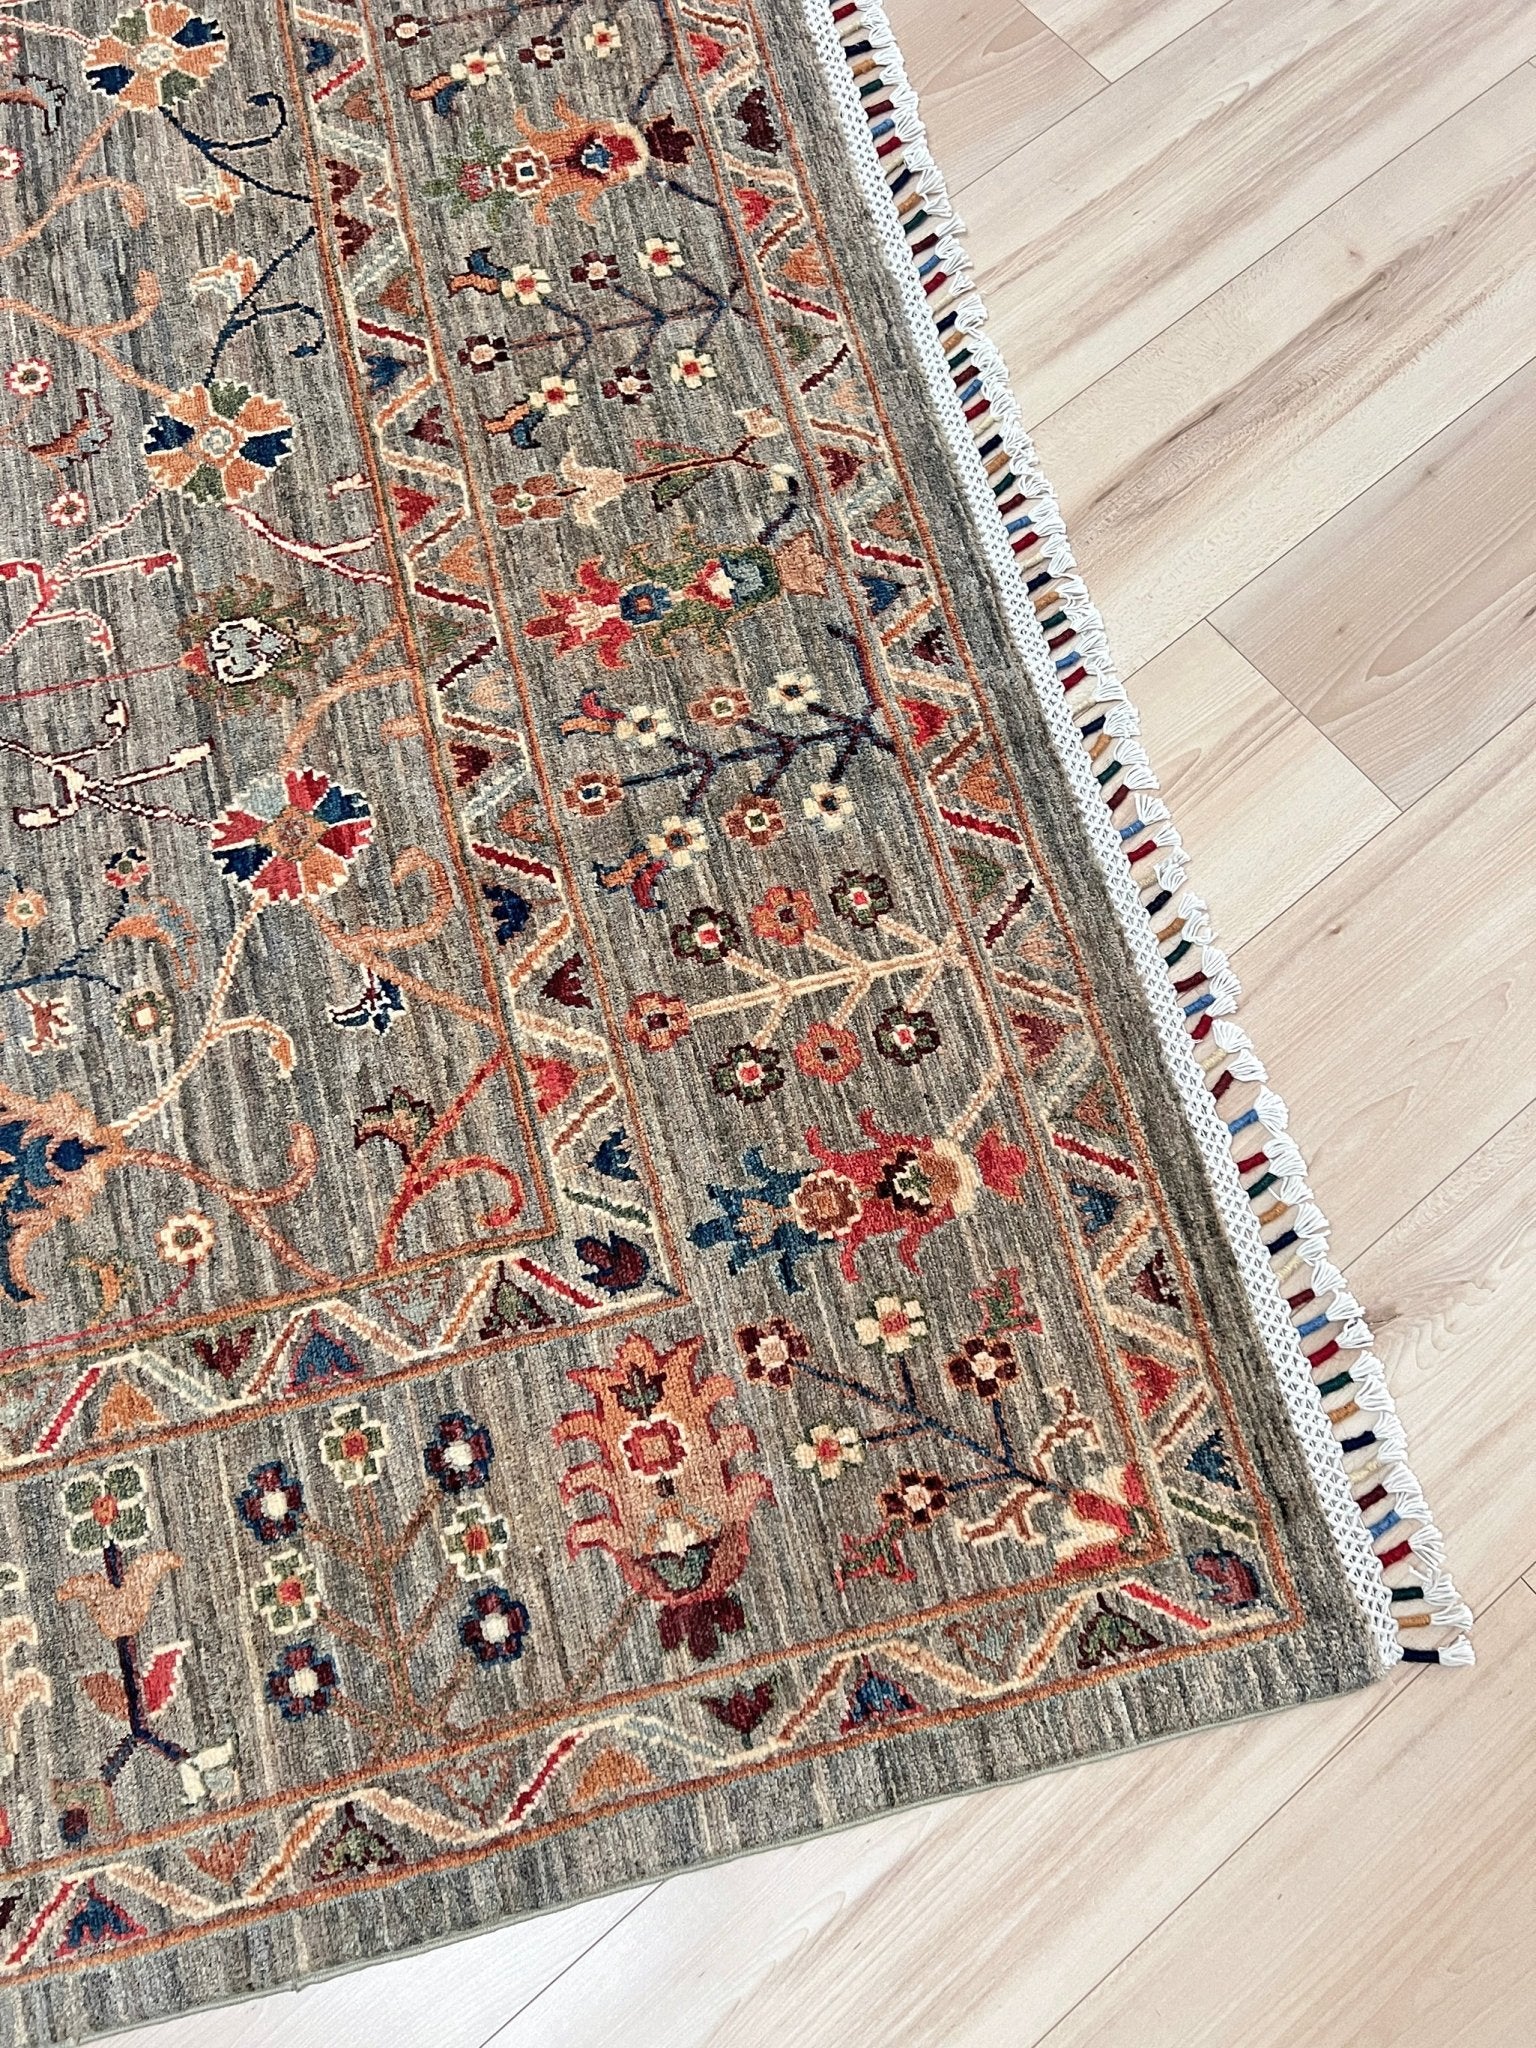 Sultani handmade wool area rug for living room bedroom dining. Oriental rug shop san francisco bay area. Buy rug online